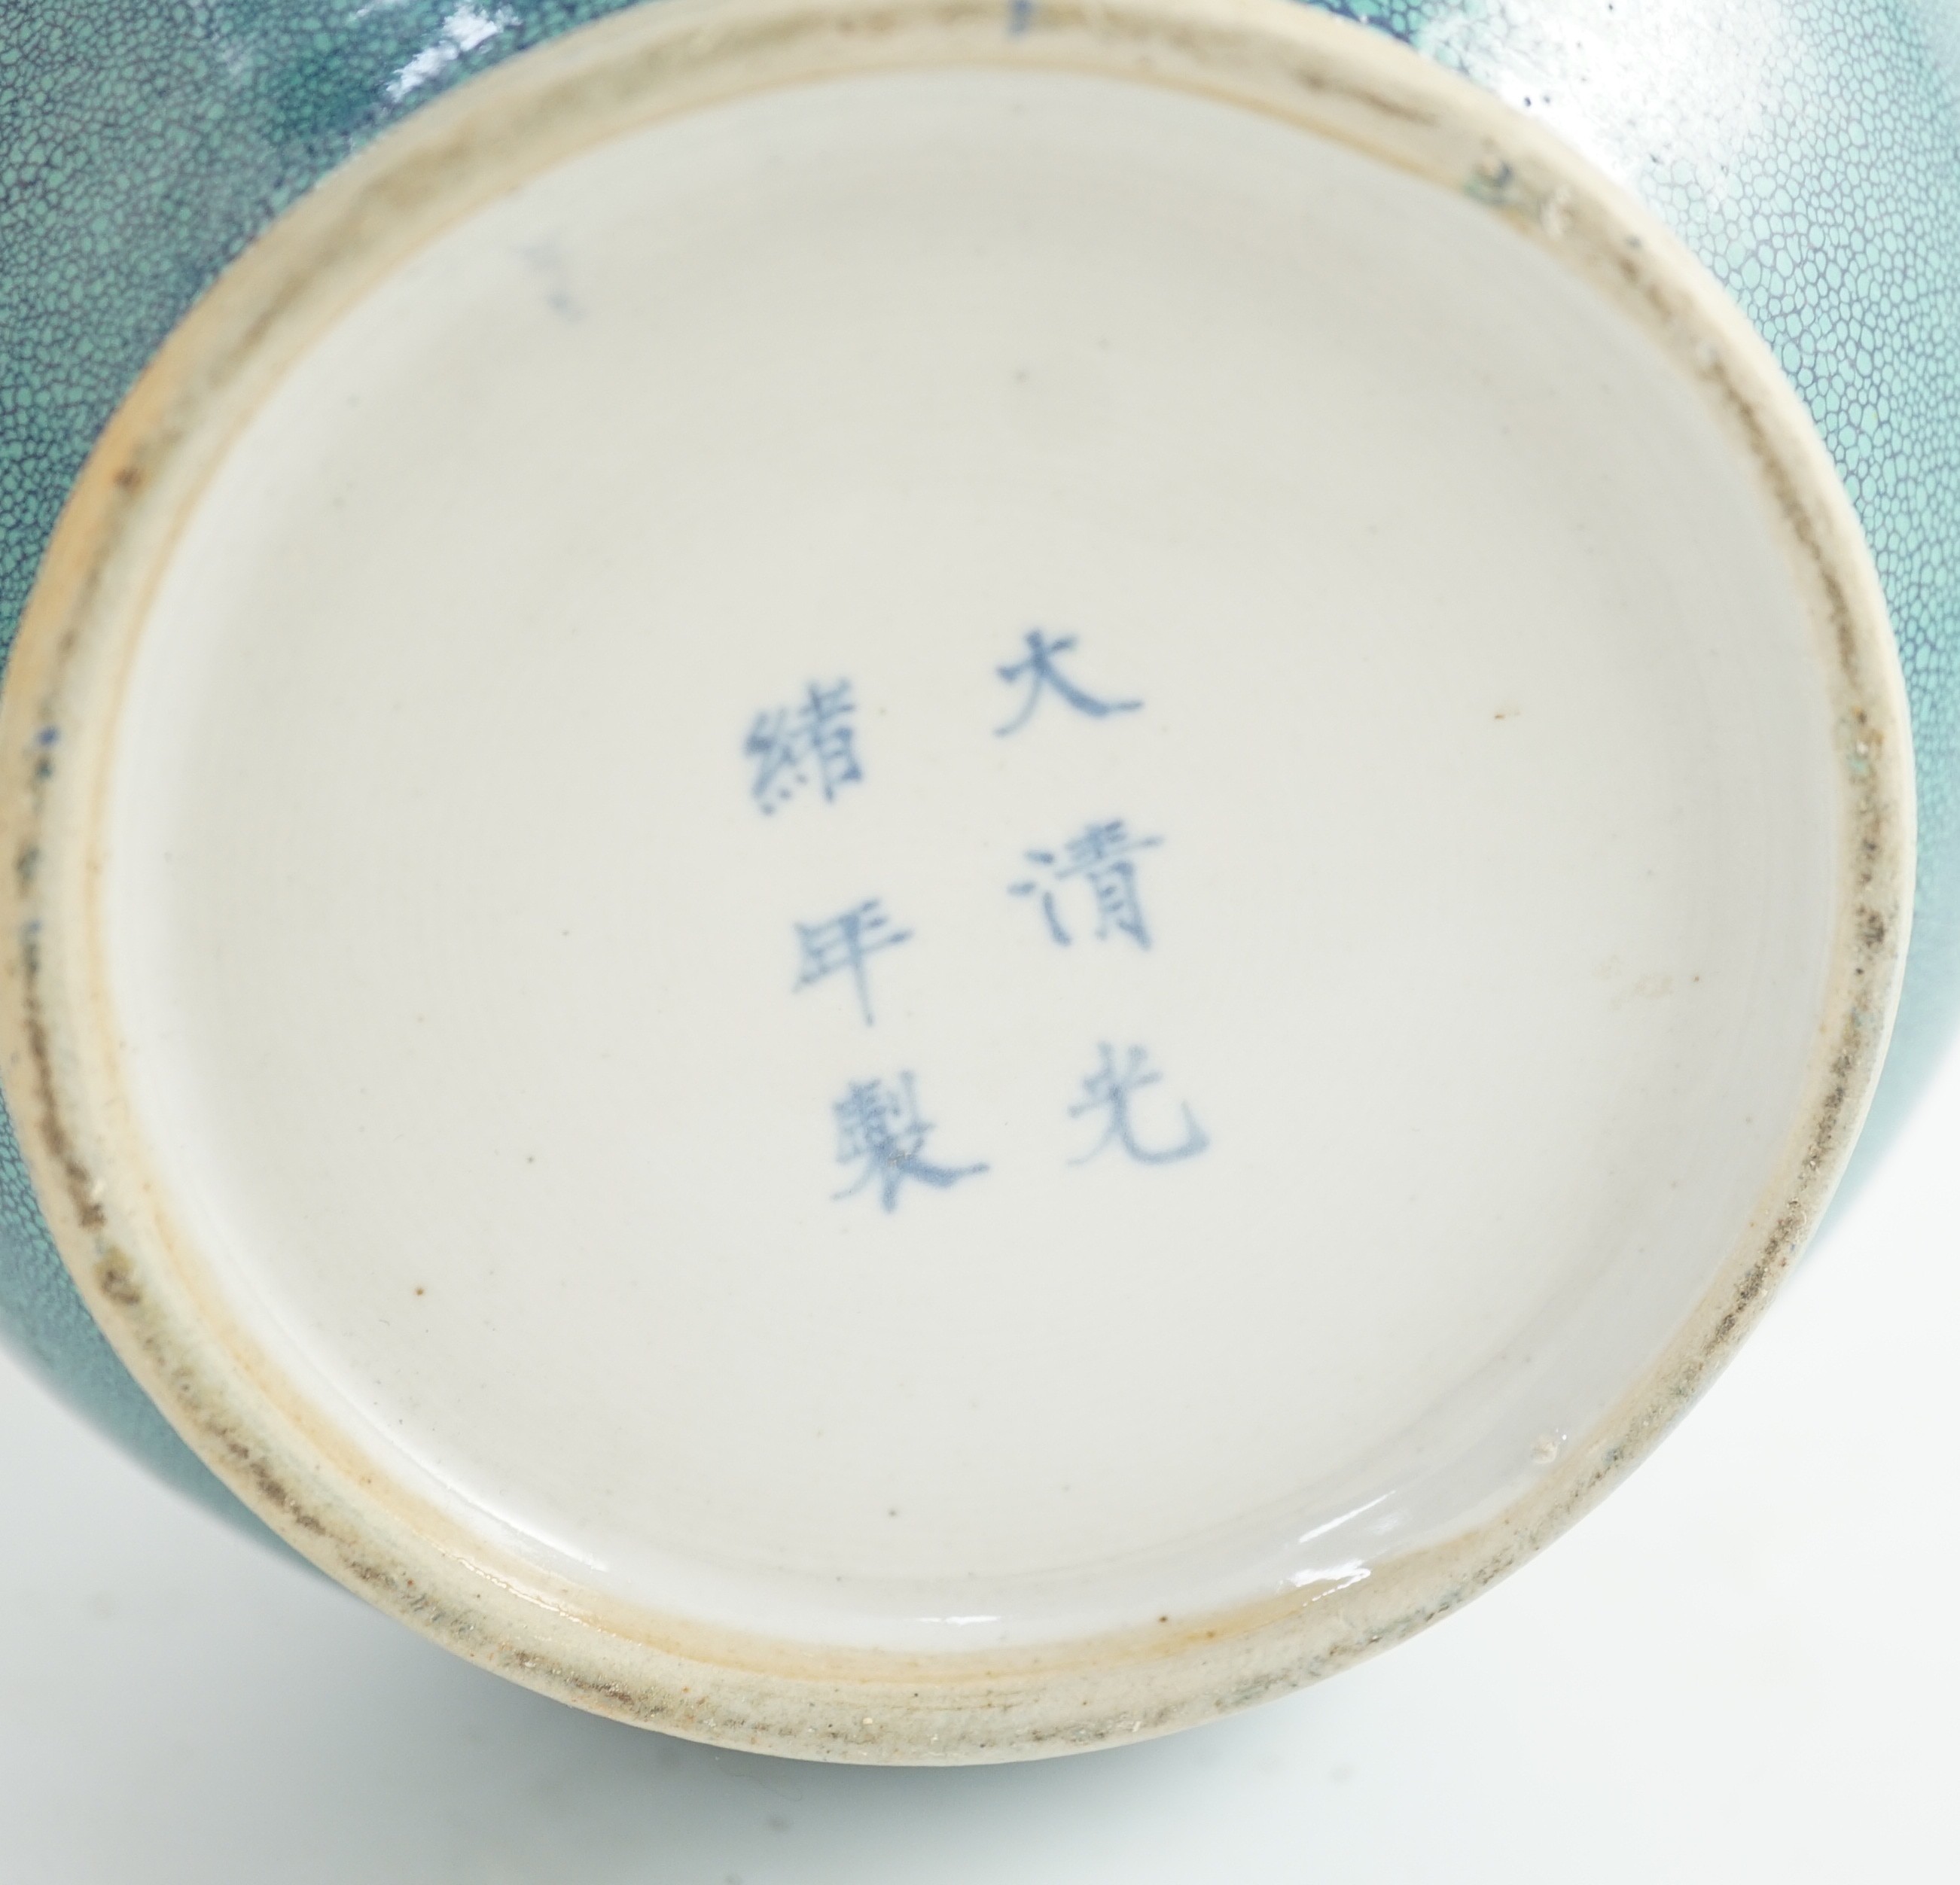 A Chinese robin’s egg glazed pear shaped vase, yuhuchunping, Guangxu mark, 28.5cm high